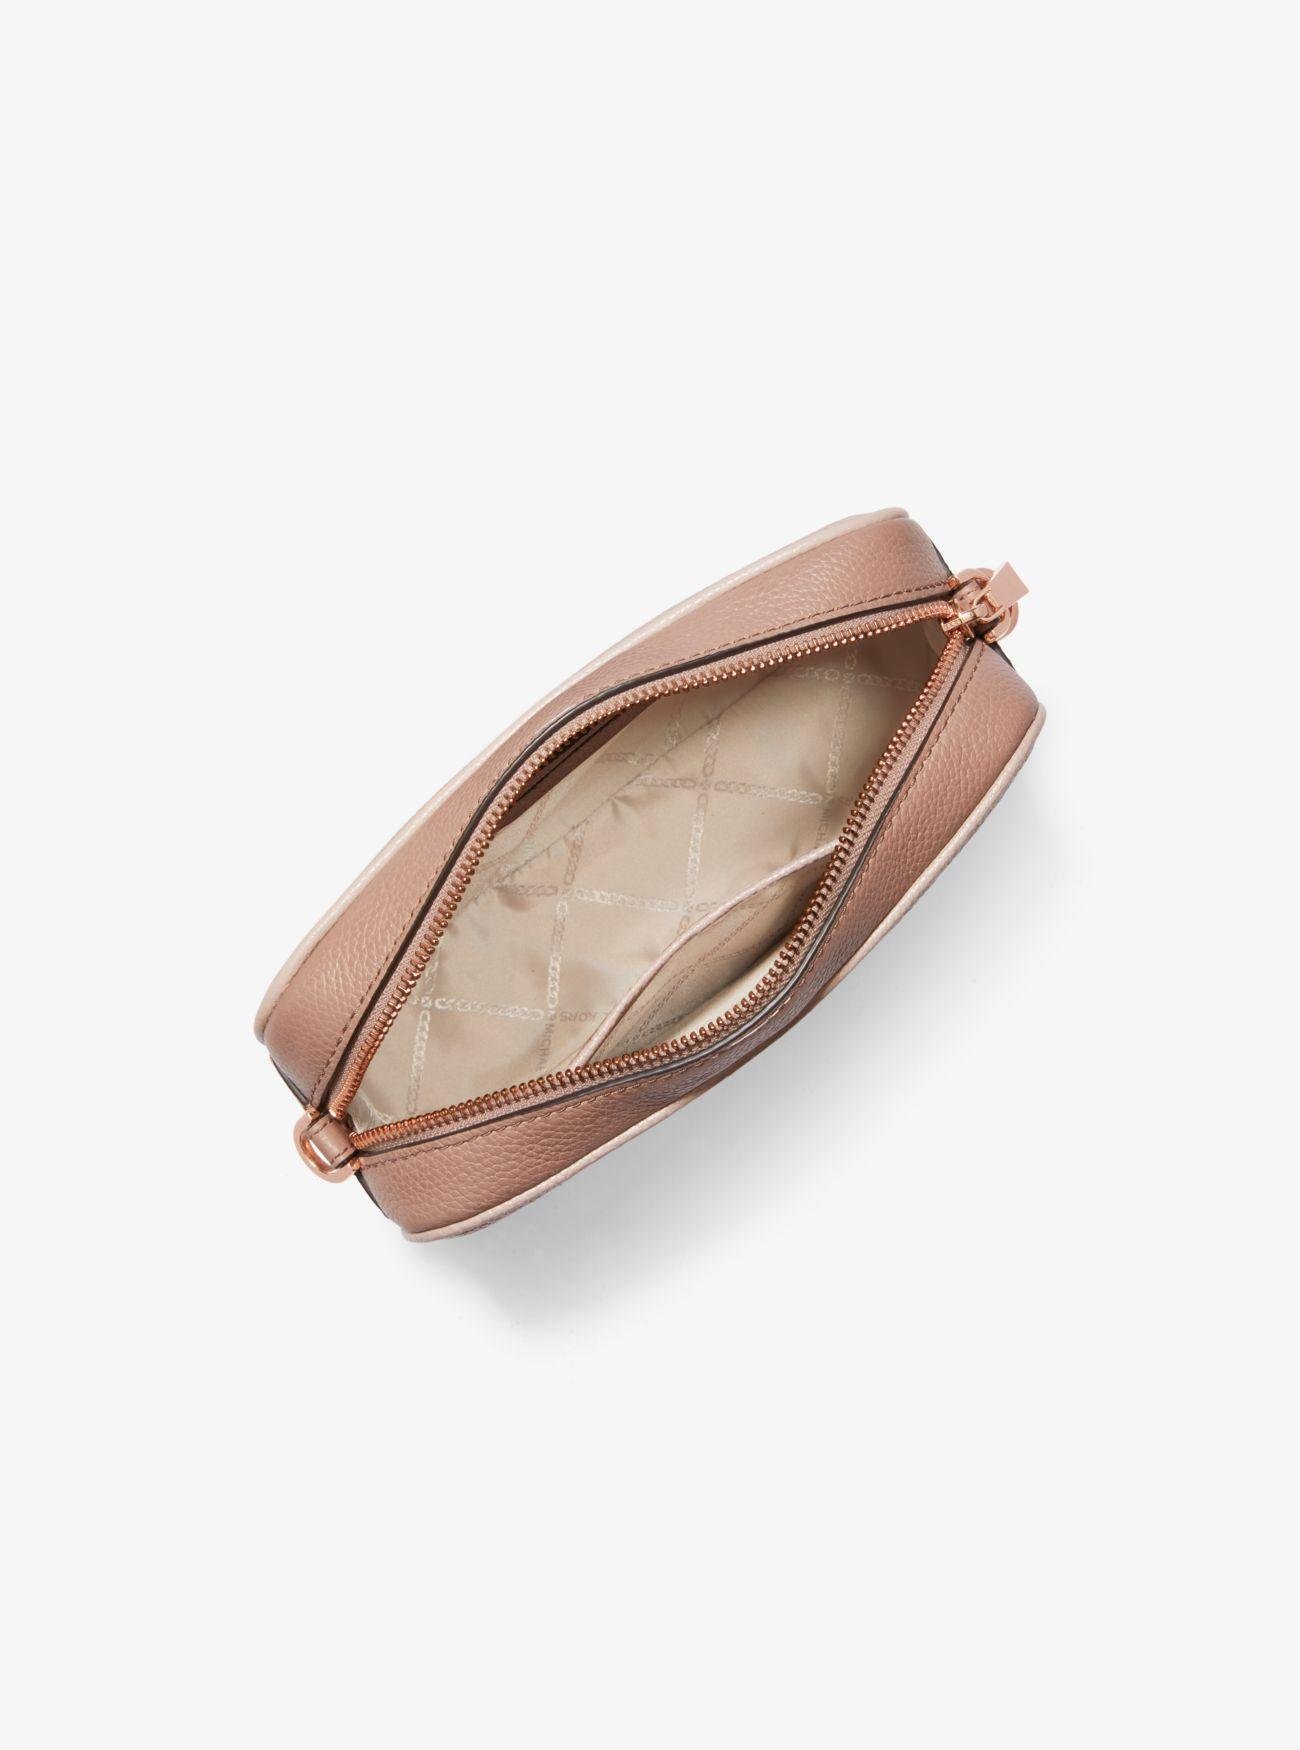 MICHAEL Michael Kors Ginny Medium Two-tone Pebbled Leather Crossbody Bag in Pink - Lyst